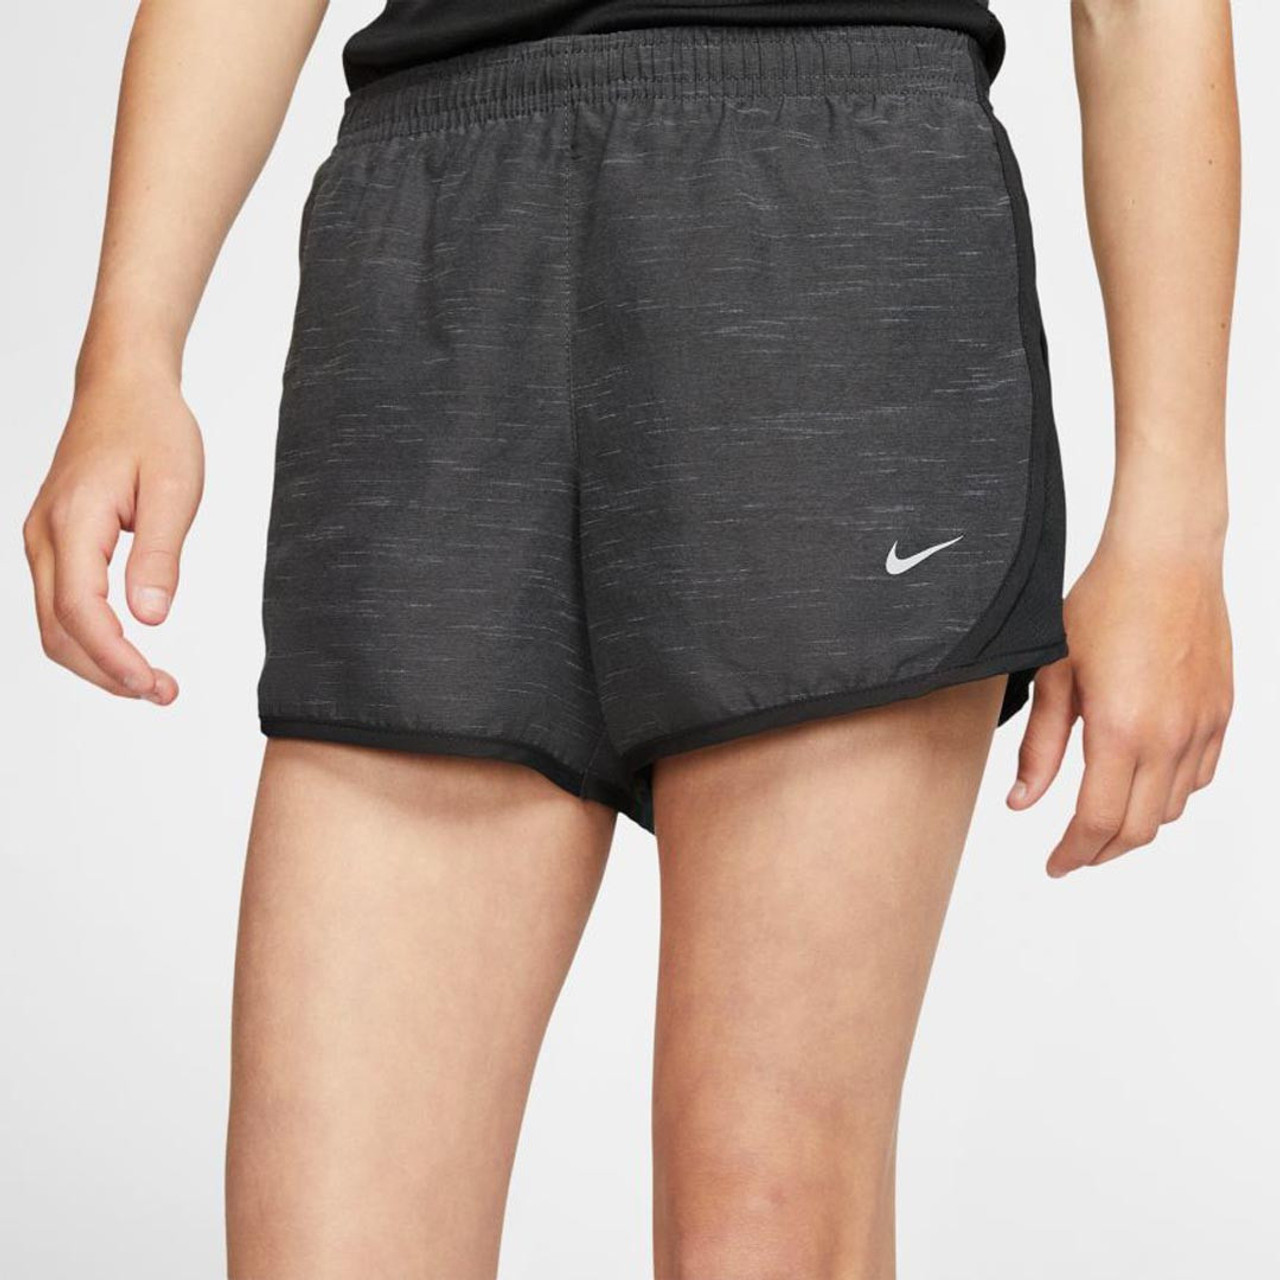 Nike Running Tempo short in black